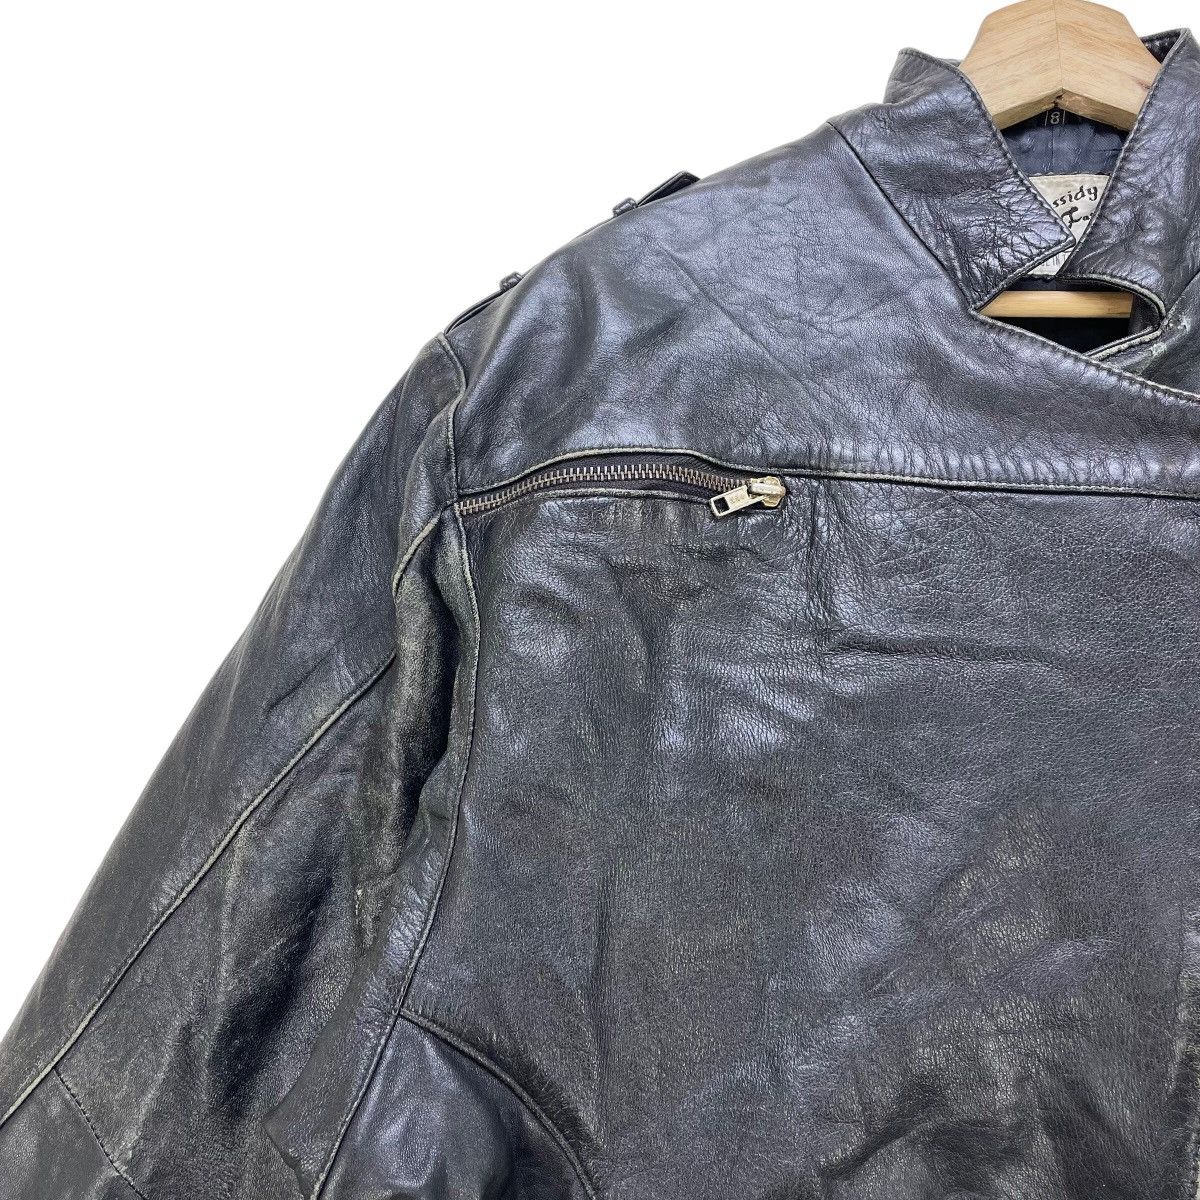 Vintage Genuine Leather Jacket Made In Turkey - 4